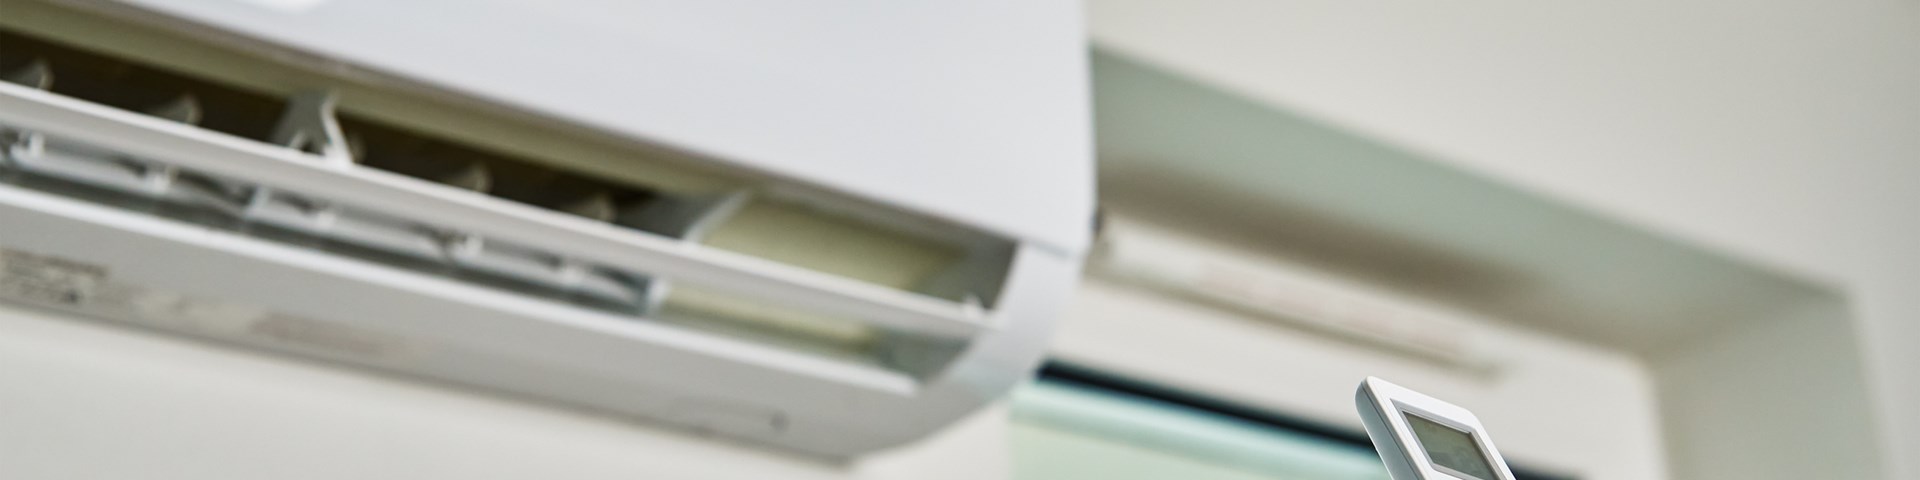 Remote control changing air conditioning unit temperature 